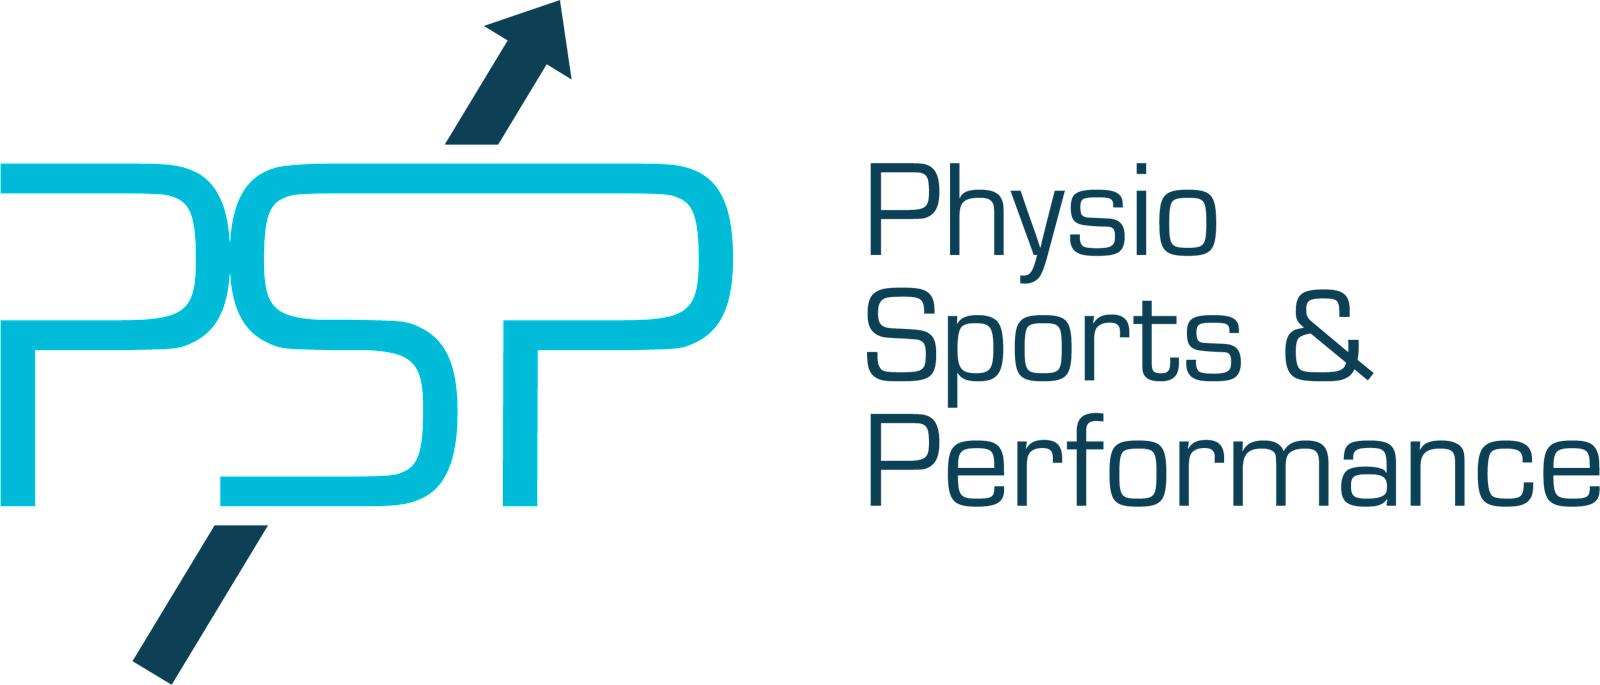 Physio Sports & Performance 